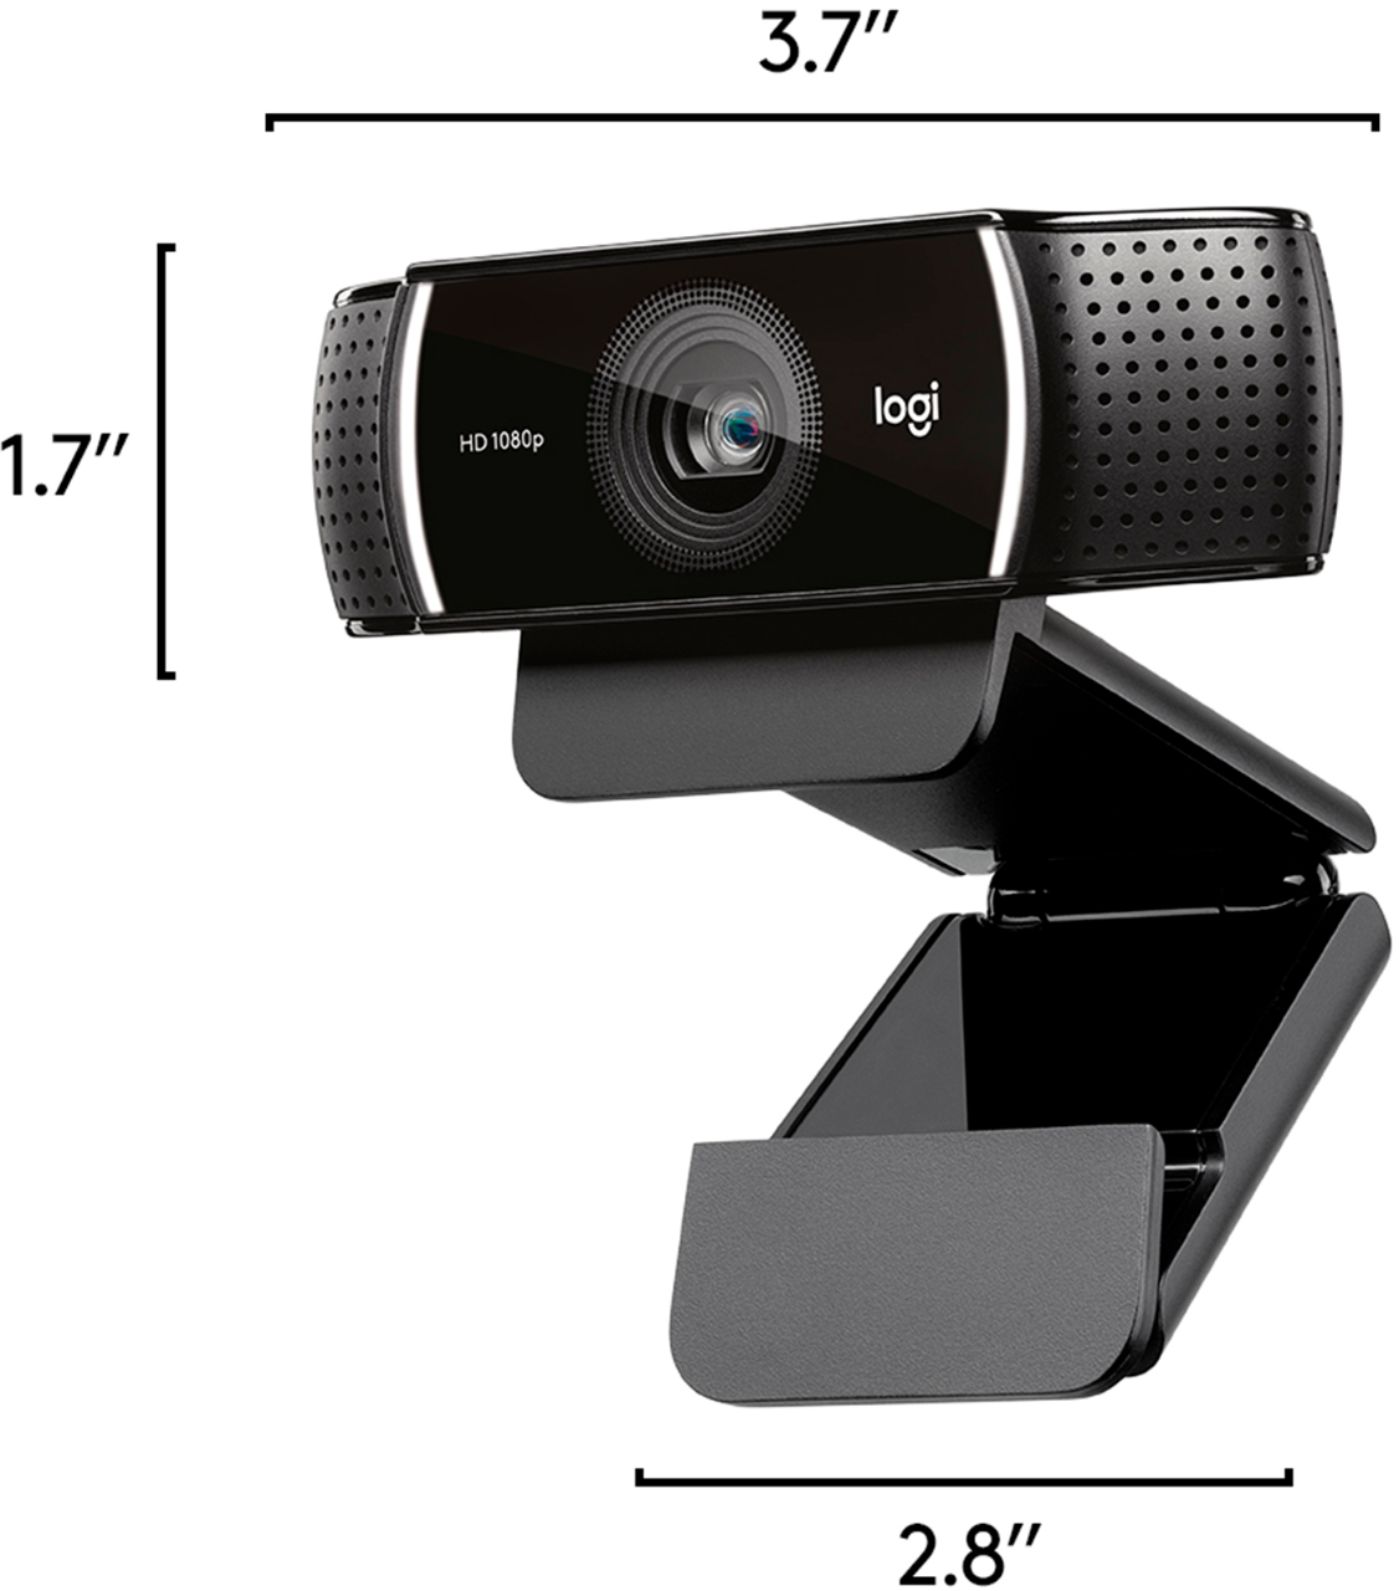 Logitech - C922 Pro Stream 1080 Webcam for HD Video Streaming - Black